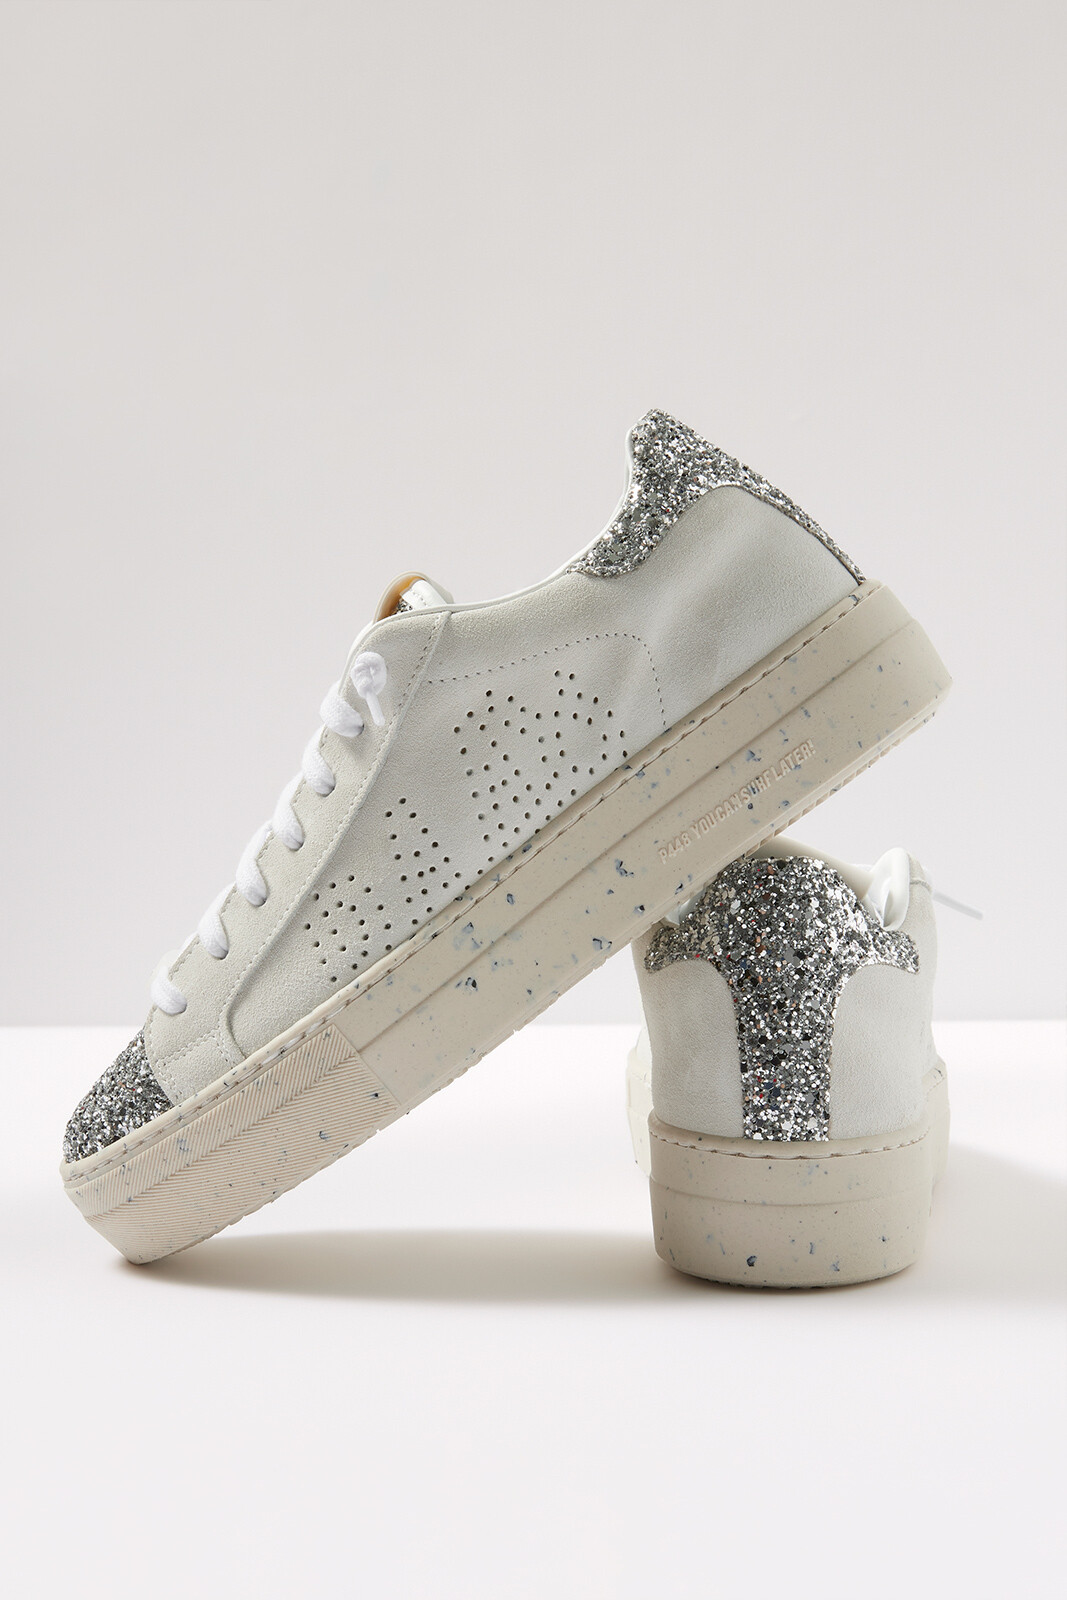 Thea White/Silver Sneaker